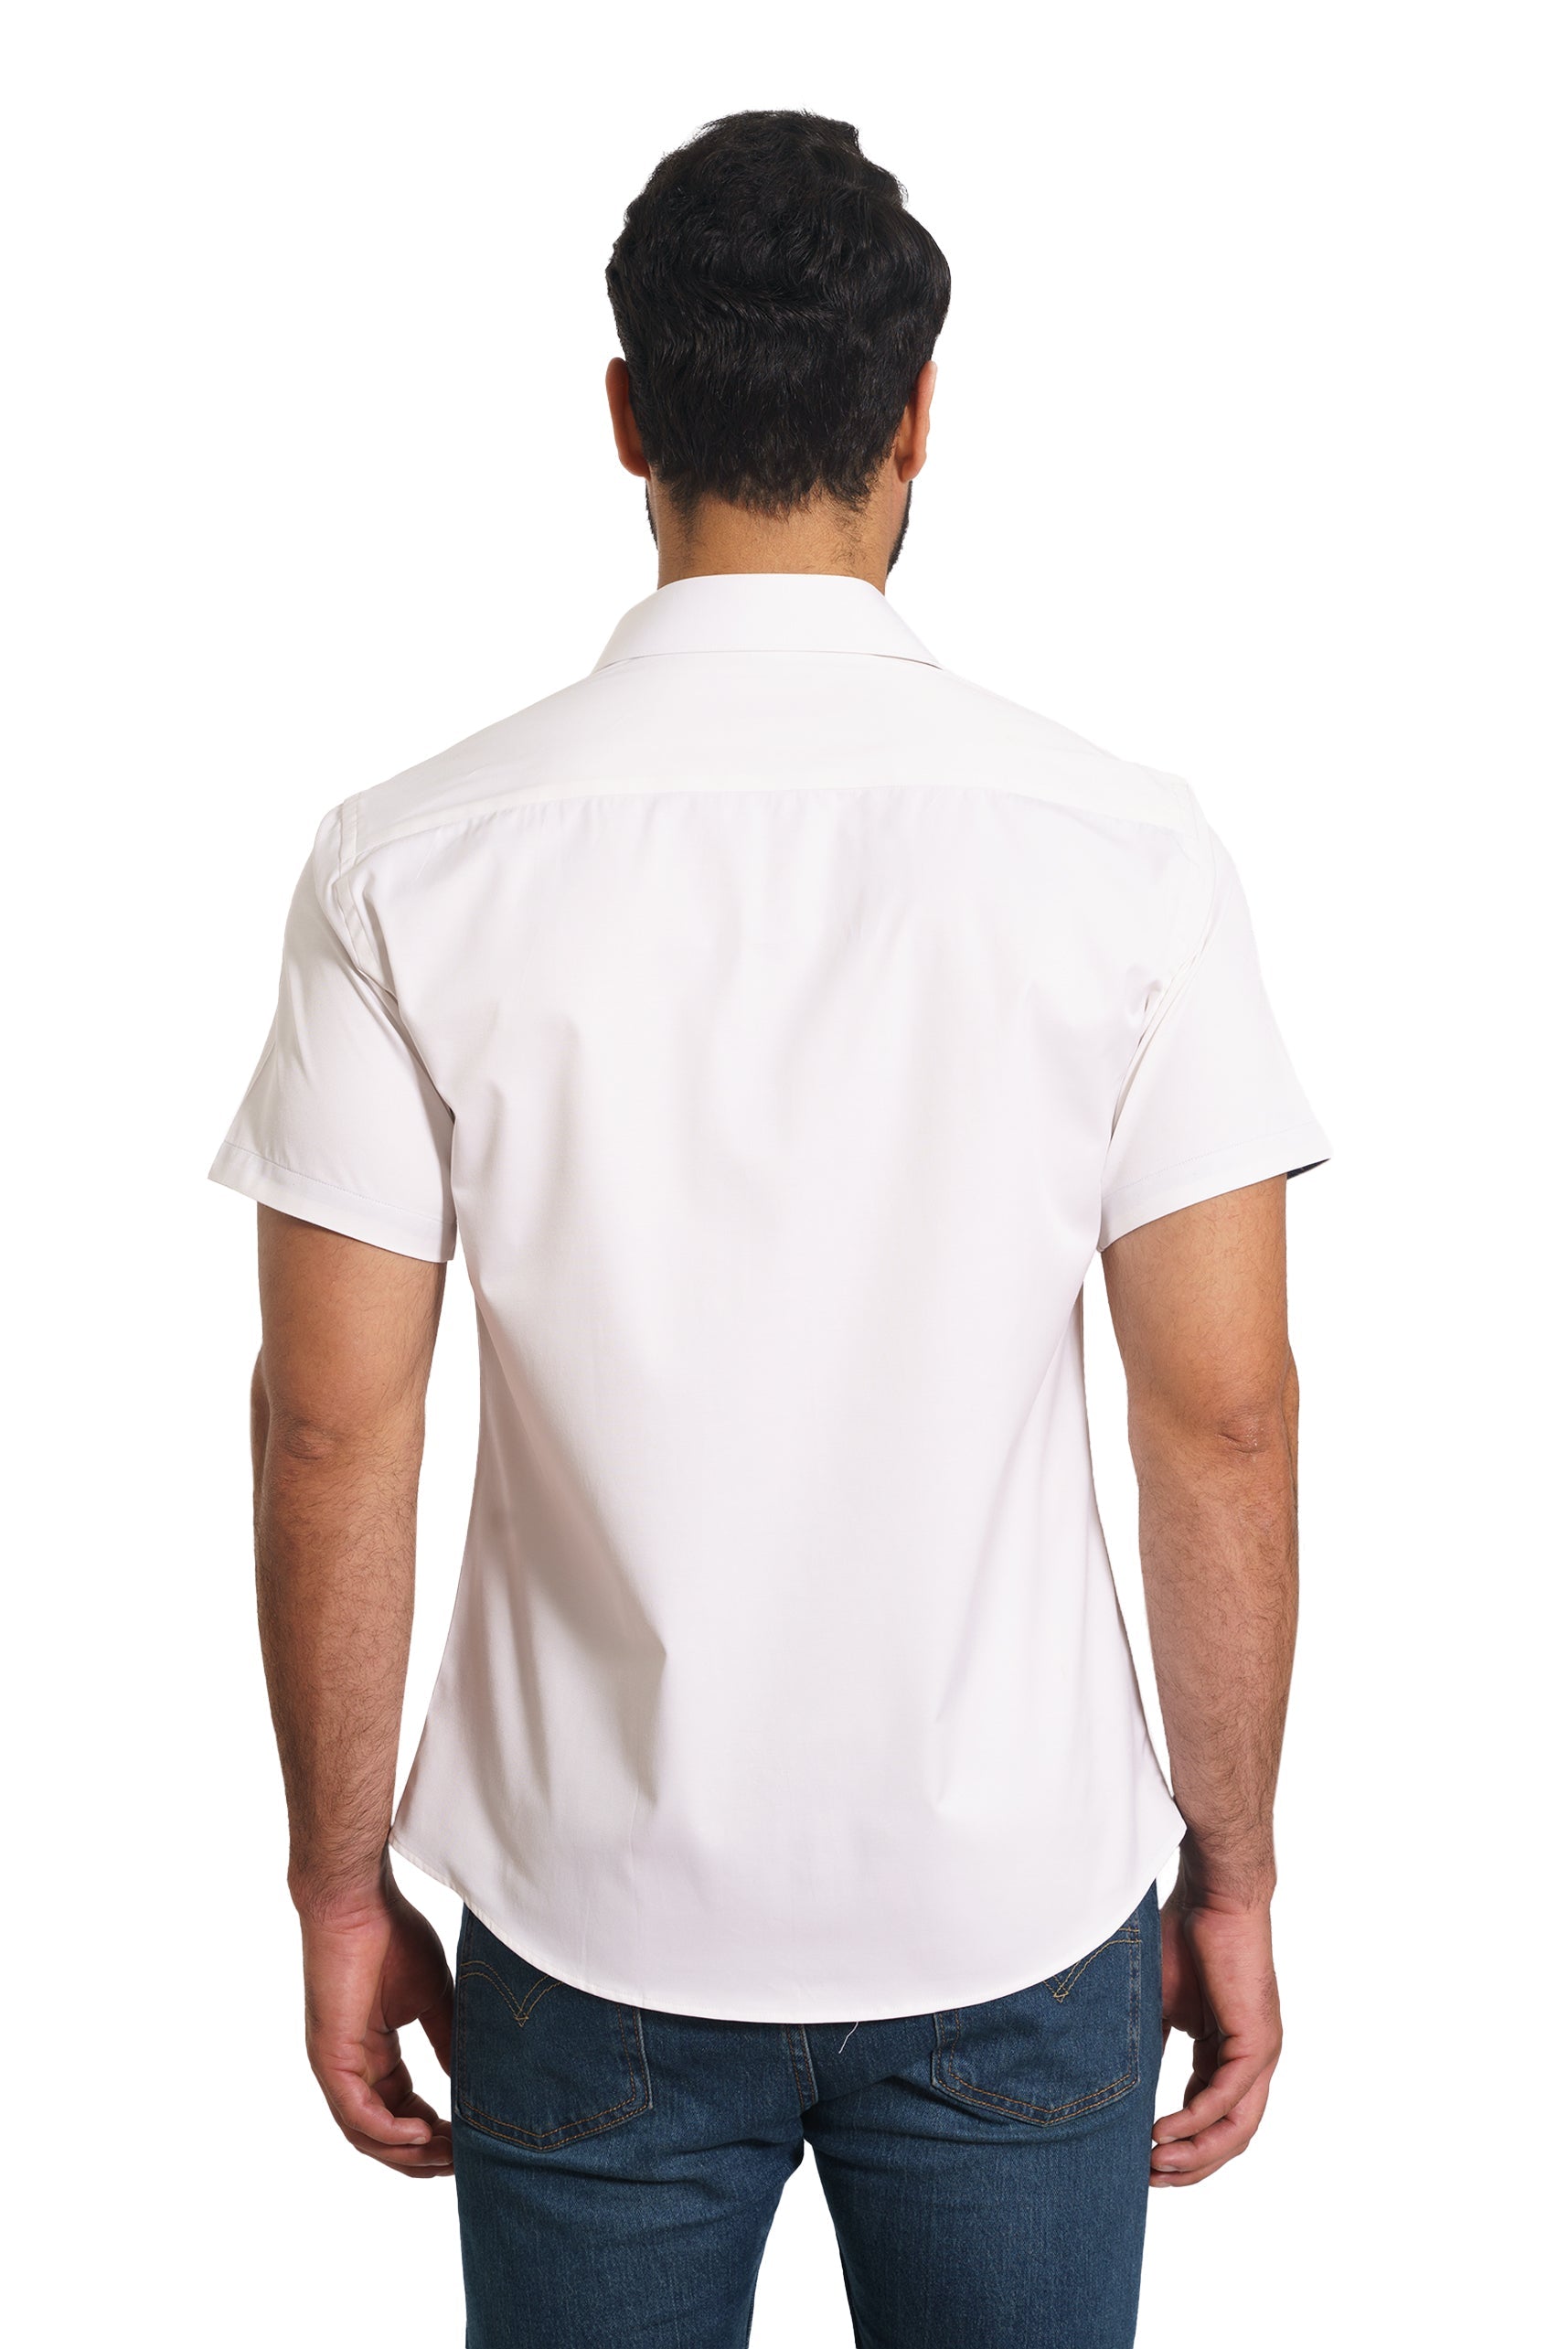 White Short Sleeve Shirt TH-2864SS Back